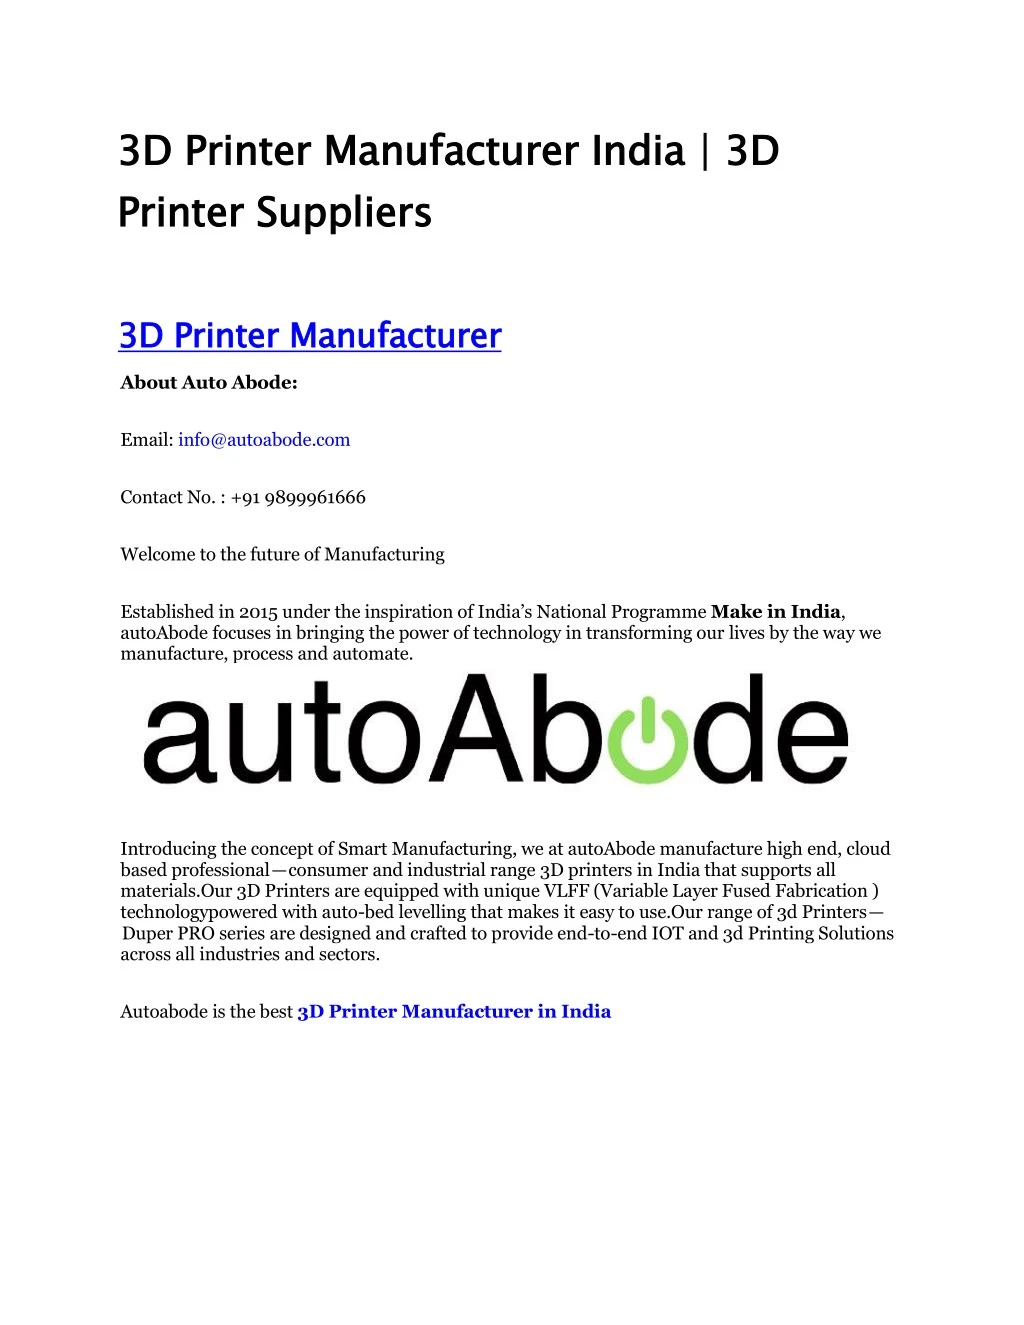 3d printer manufacturer india 3d printer suppliers